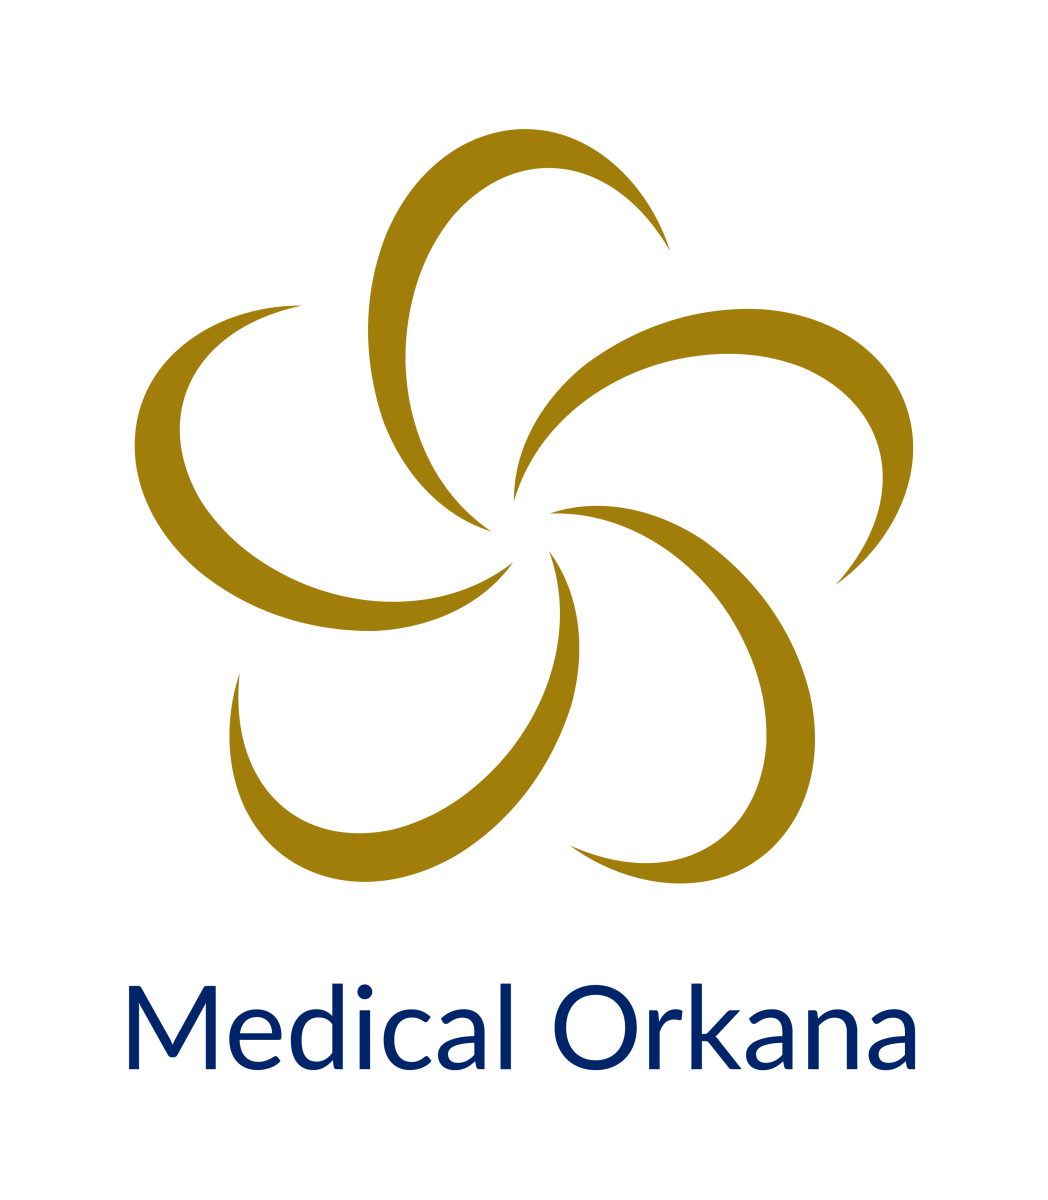 Medical Orkana